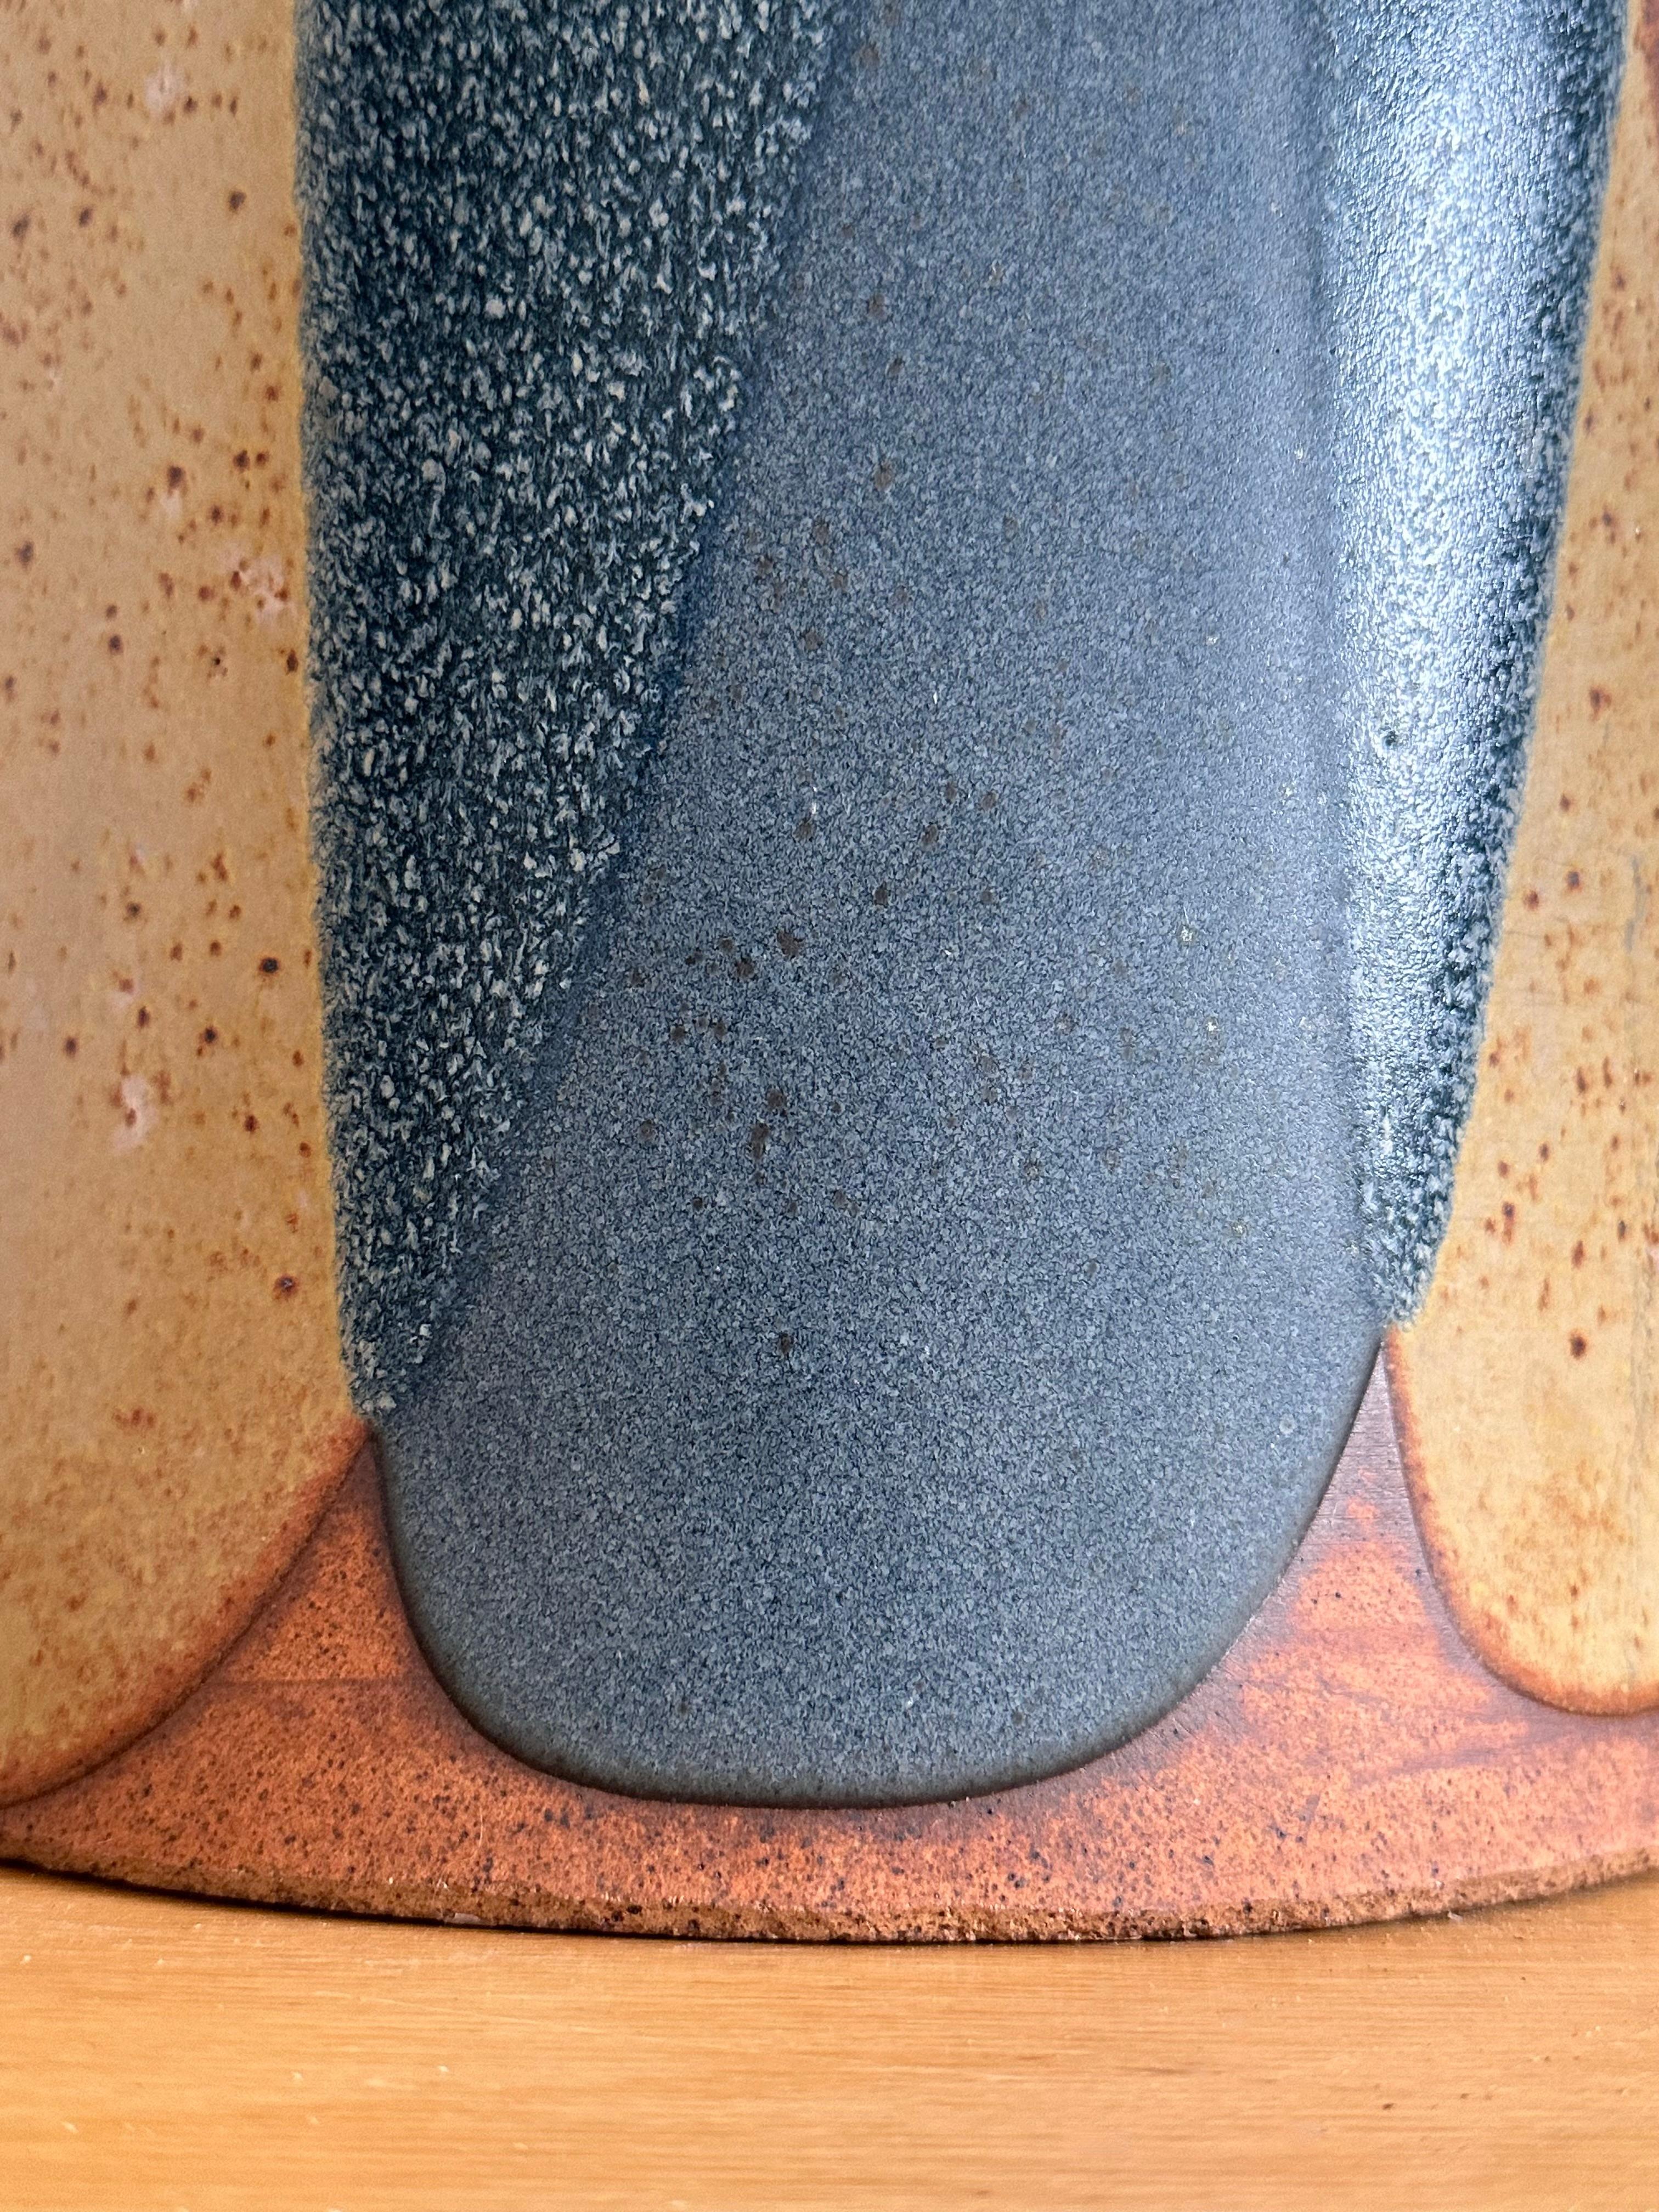 David Cressey Architectural Pottery Pro Artisan Flame Glaze Stoneware Planter 4